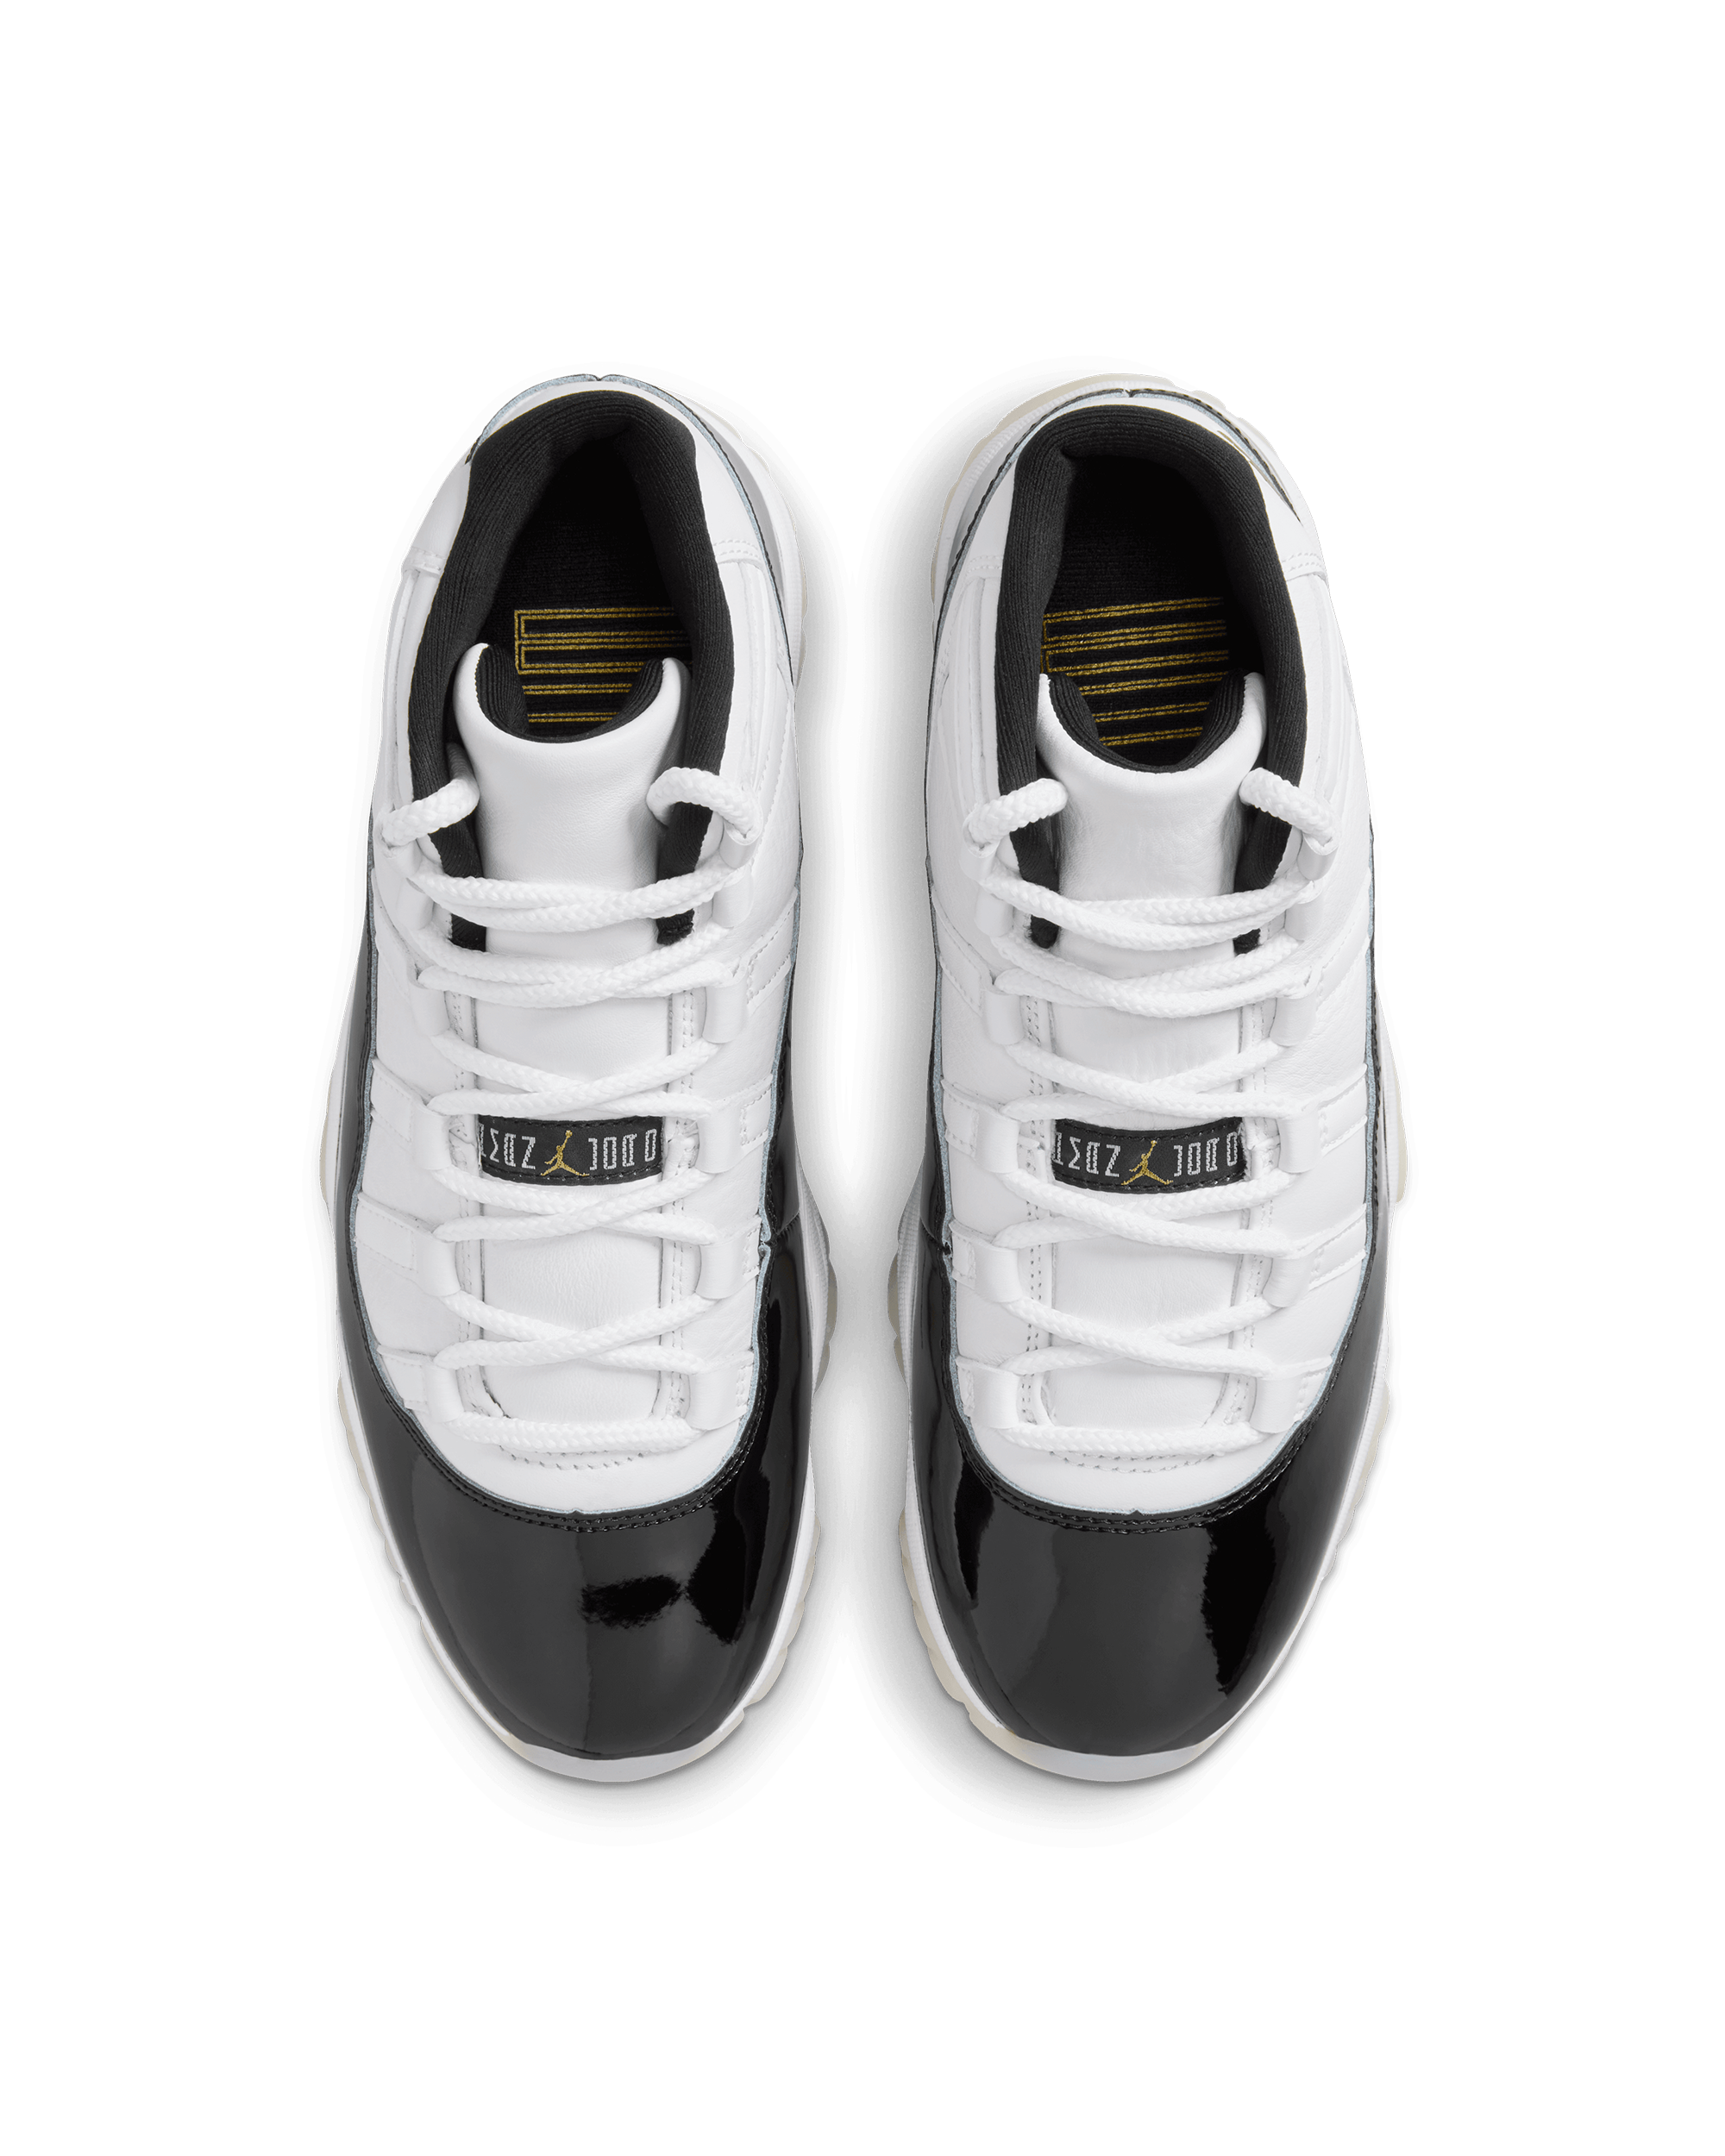 Air Jordan 11 Retro "Gratitude" - White / Metallic Gold-Black